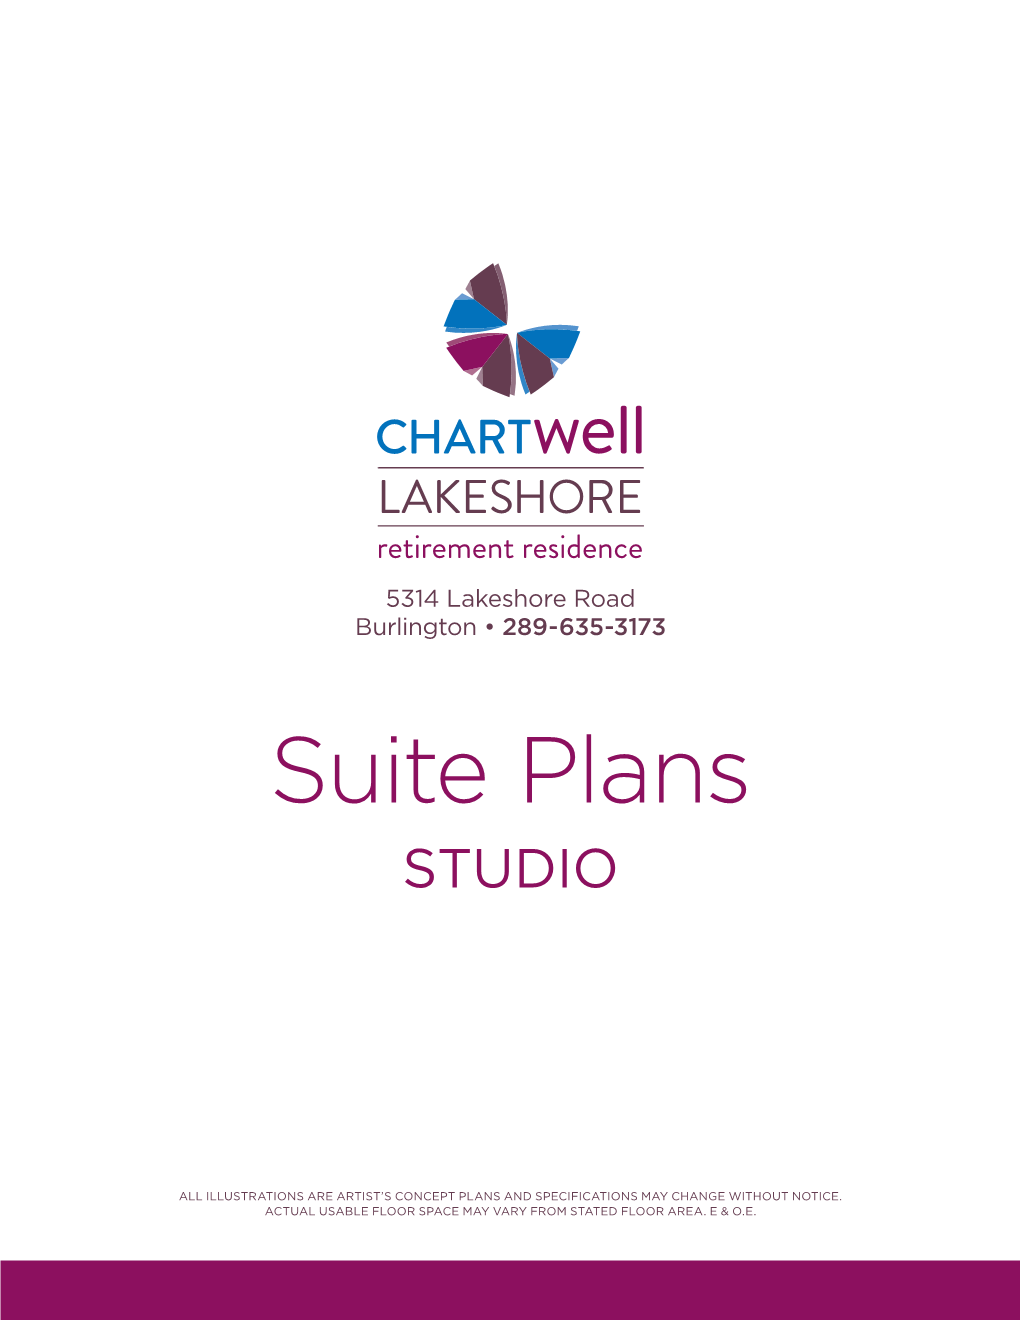 Lakeshore Studio Suite Plans